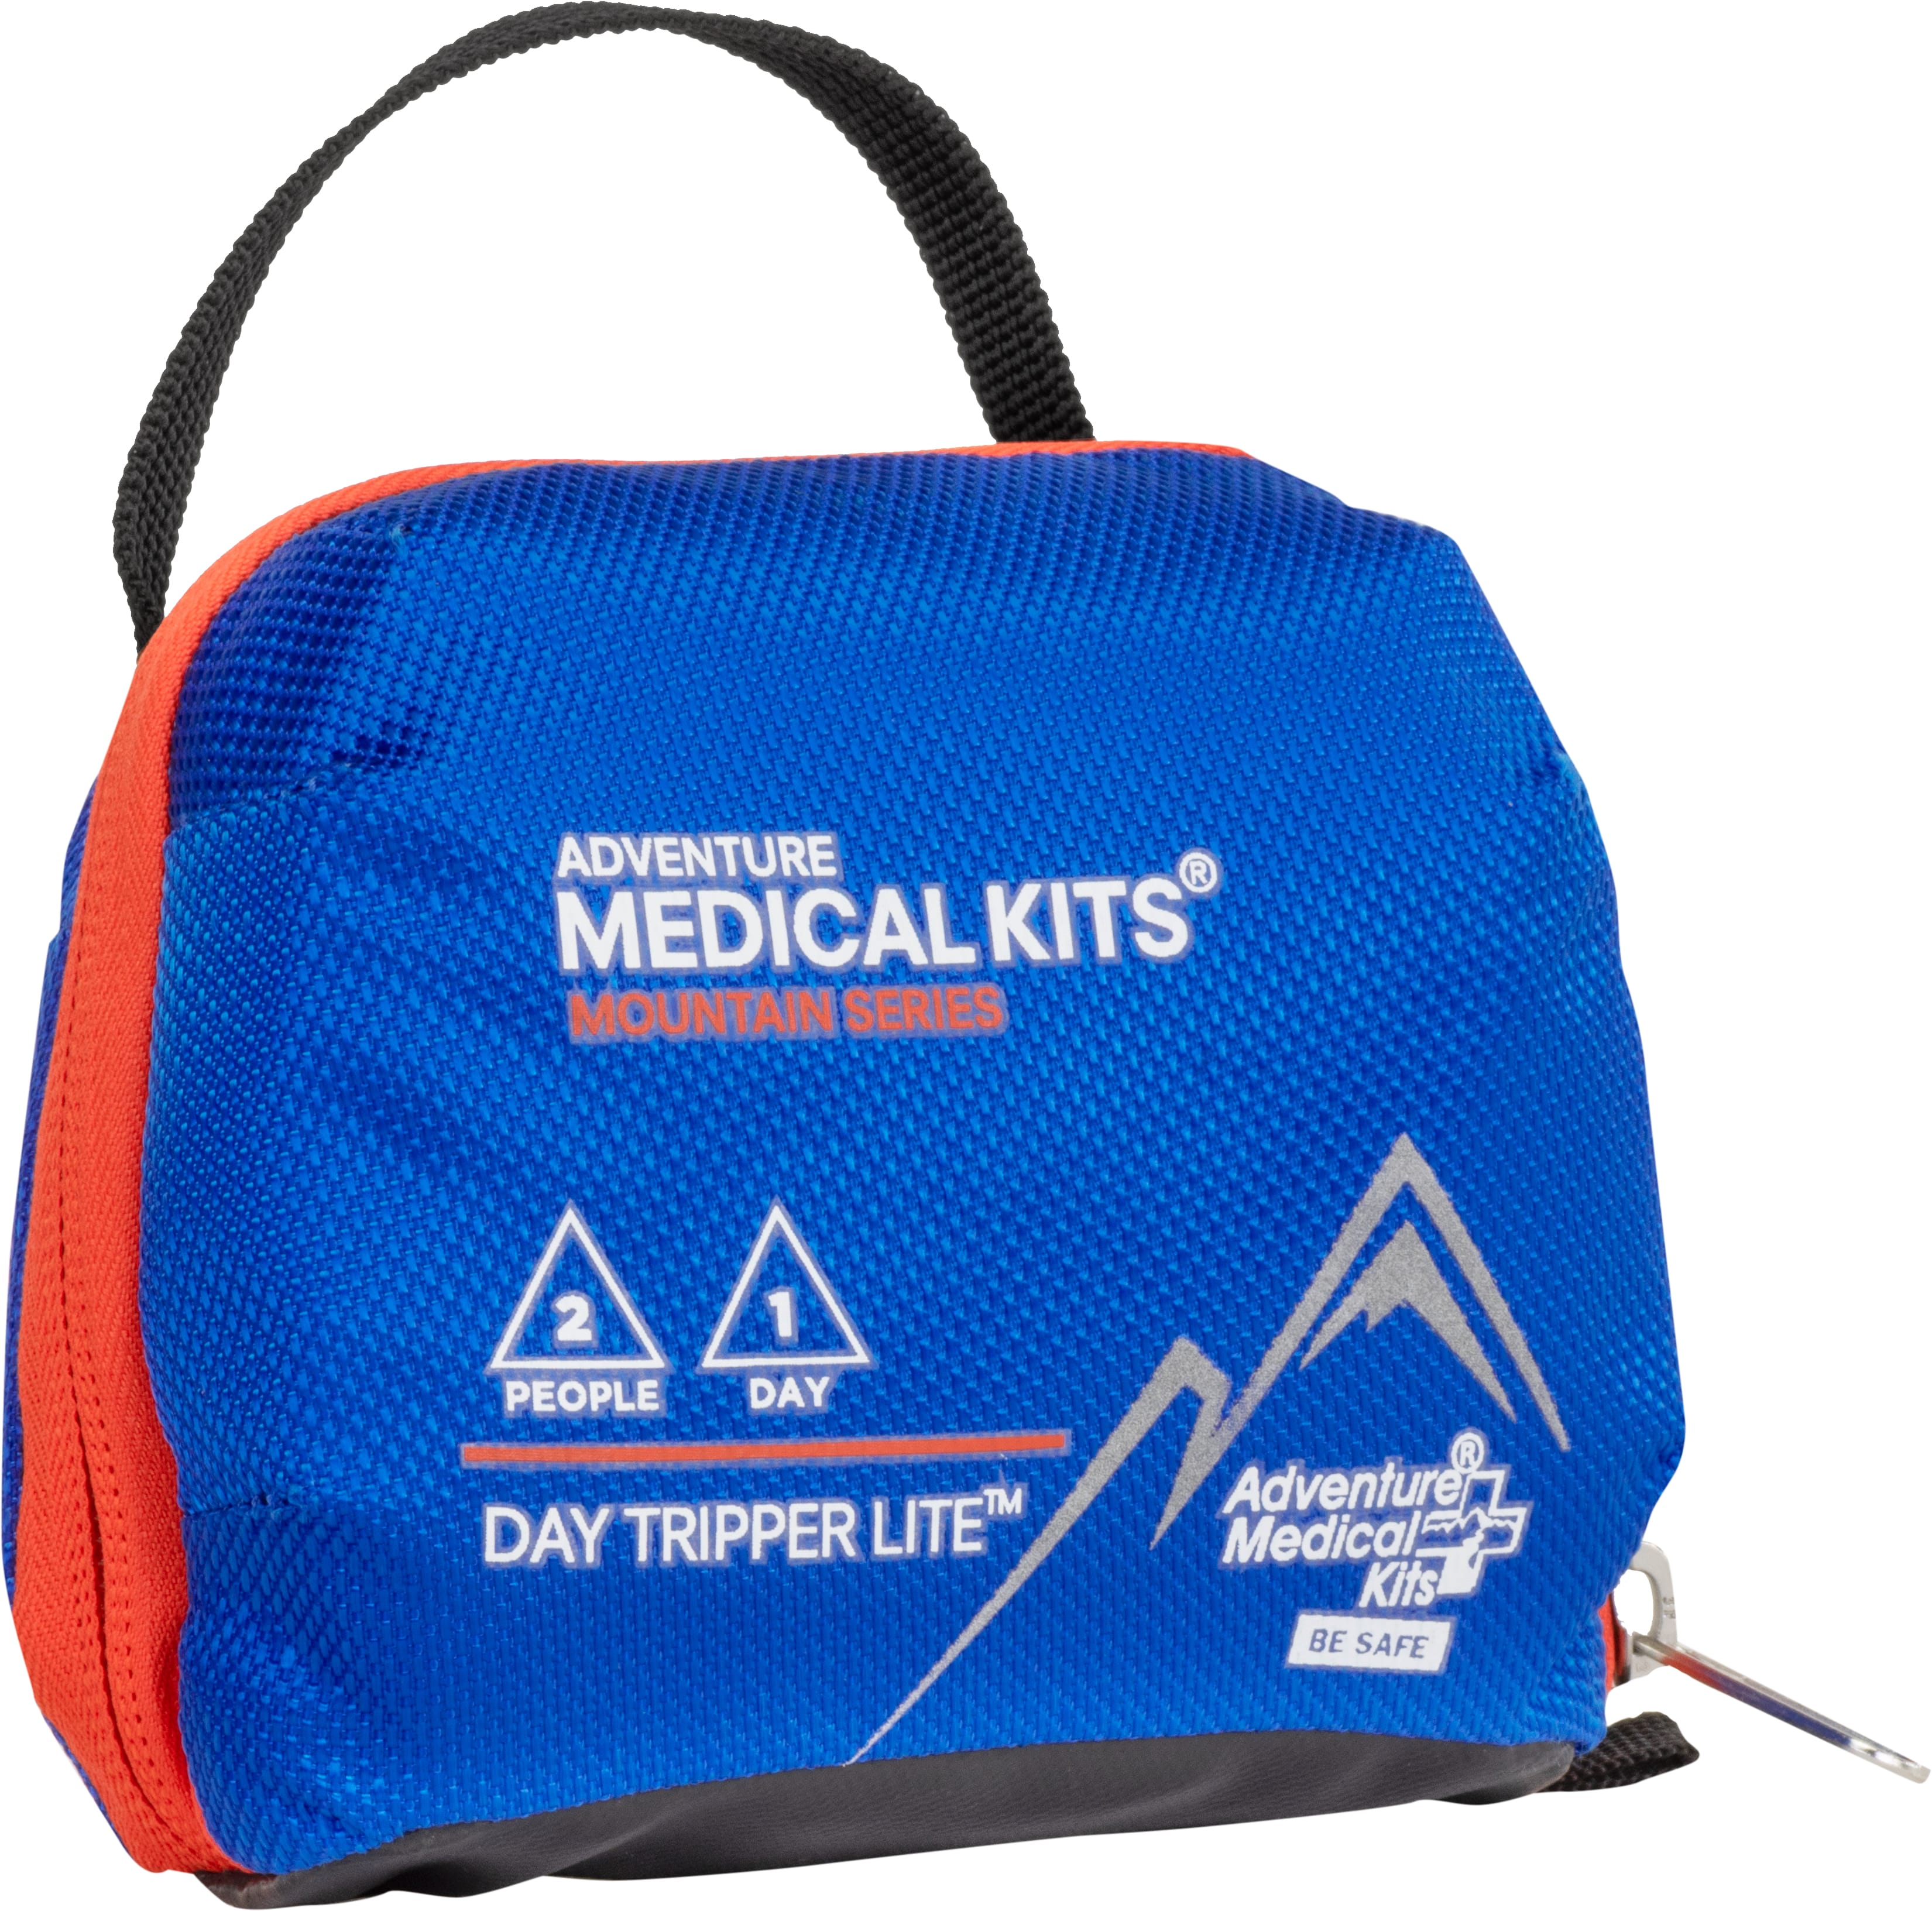 Mountain Day Tripper Lite Kit - Canada